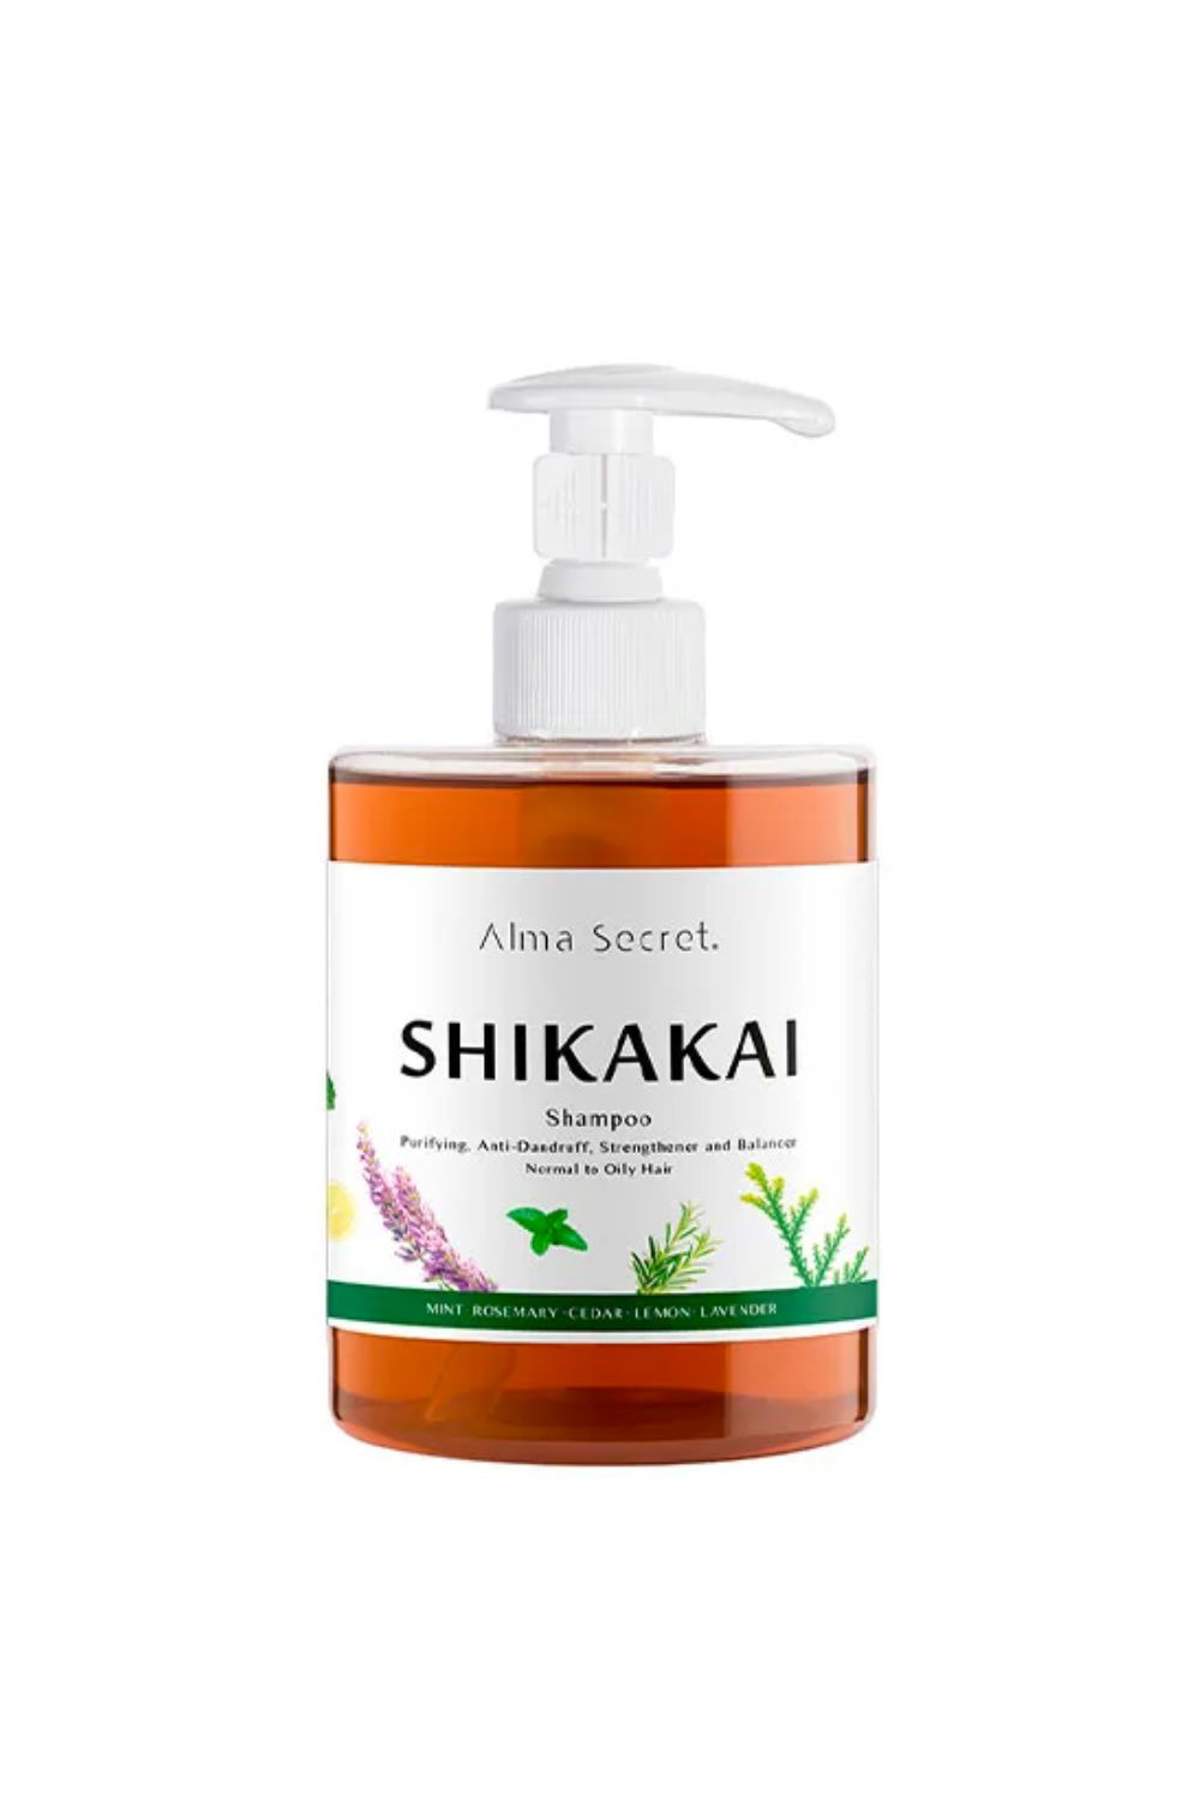 Shikakai Shampoo de Alma Secret